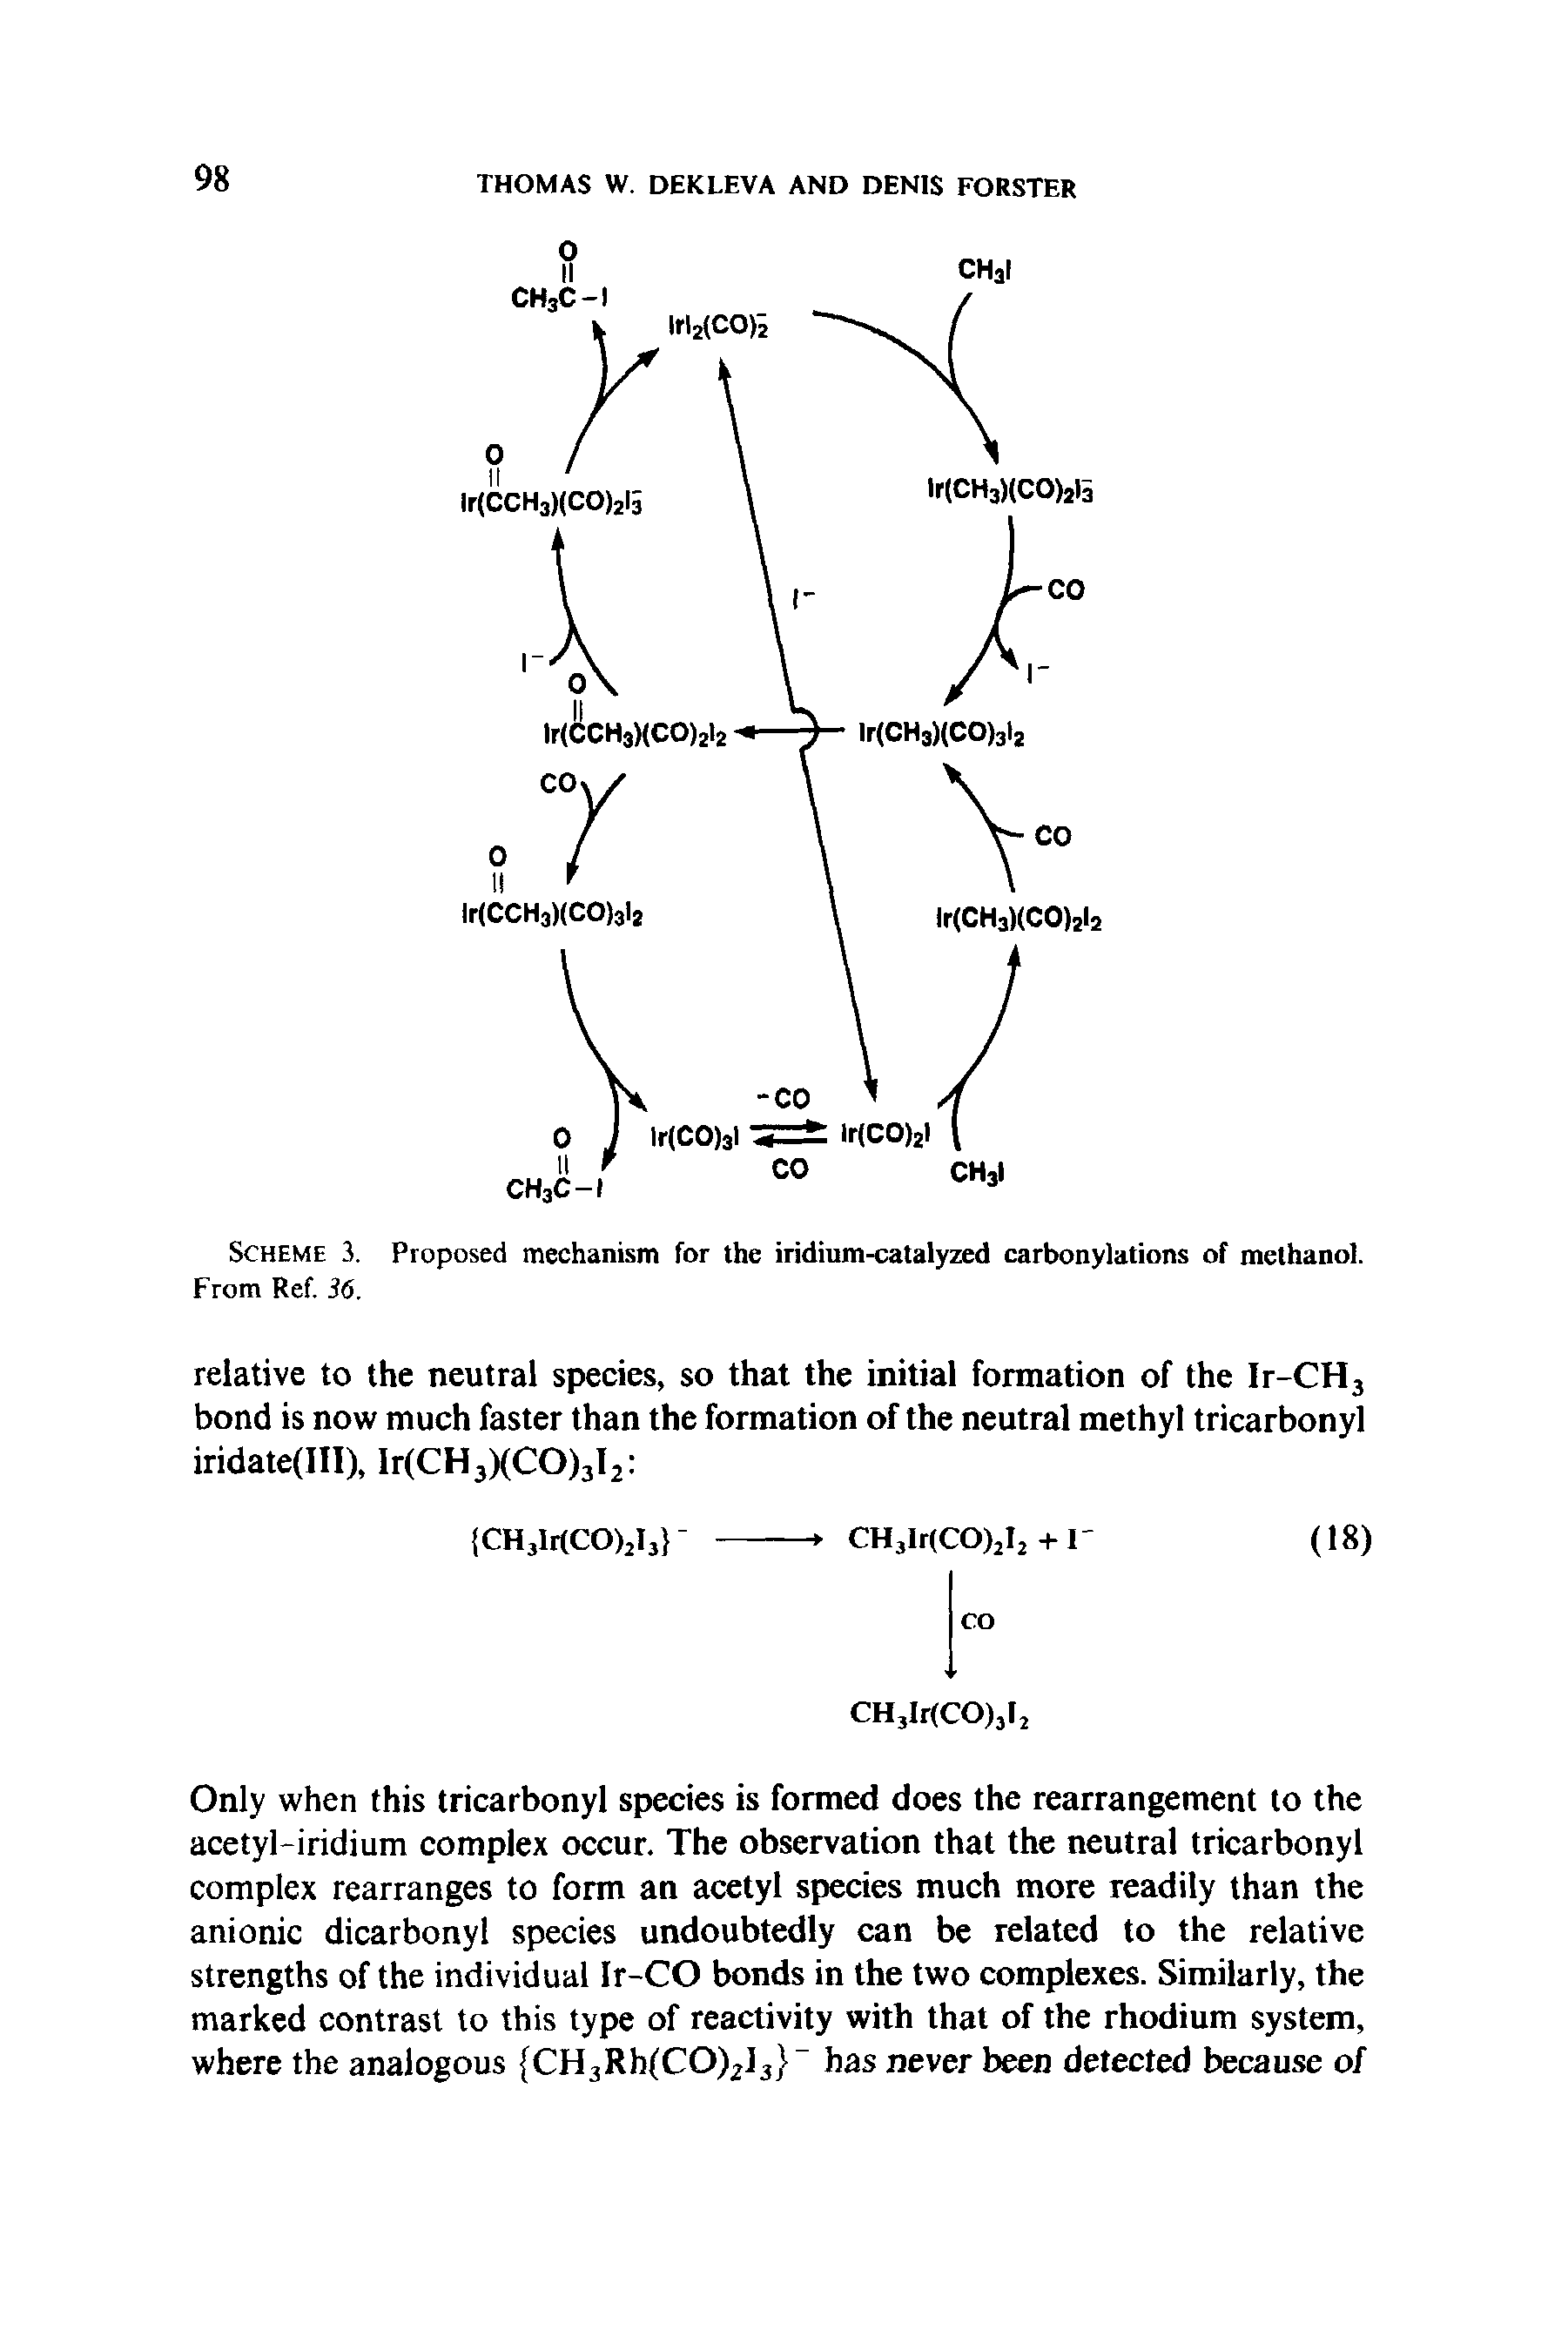 Scheme 3. Proposed mechanism for the iridium-catalyzed carbonylations of methanol.